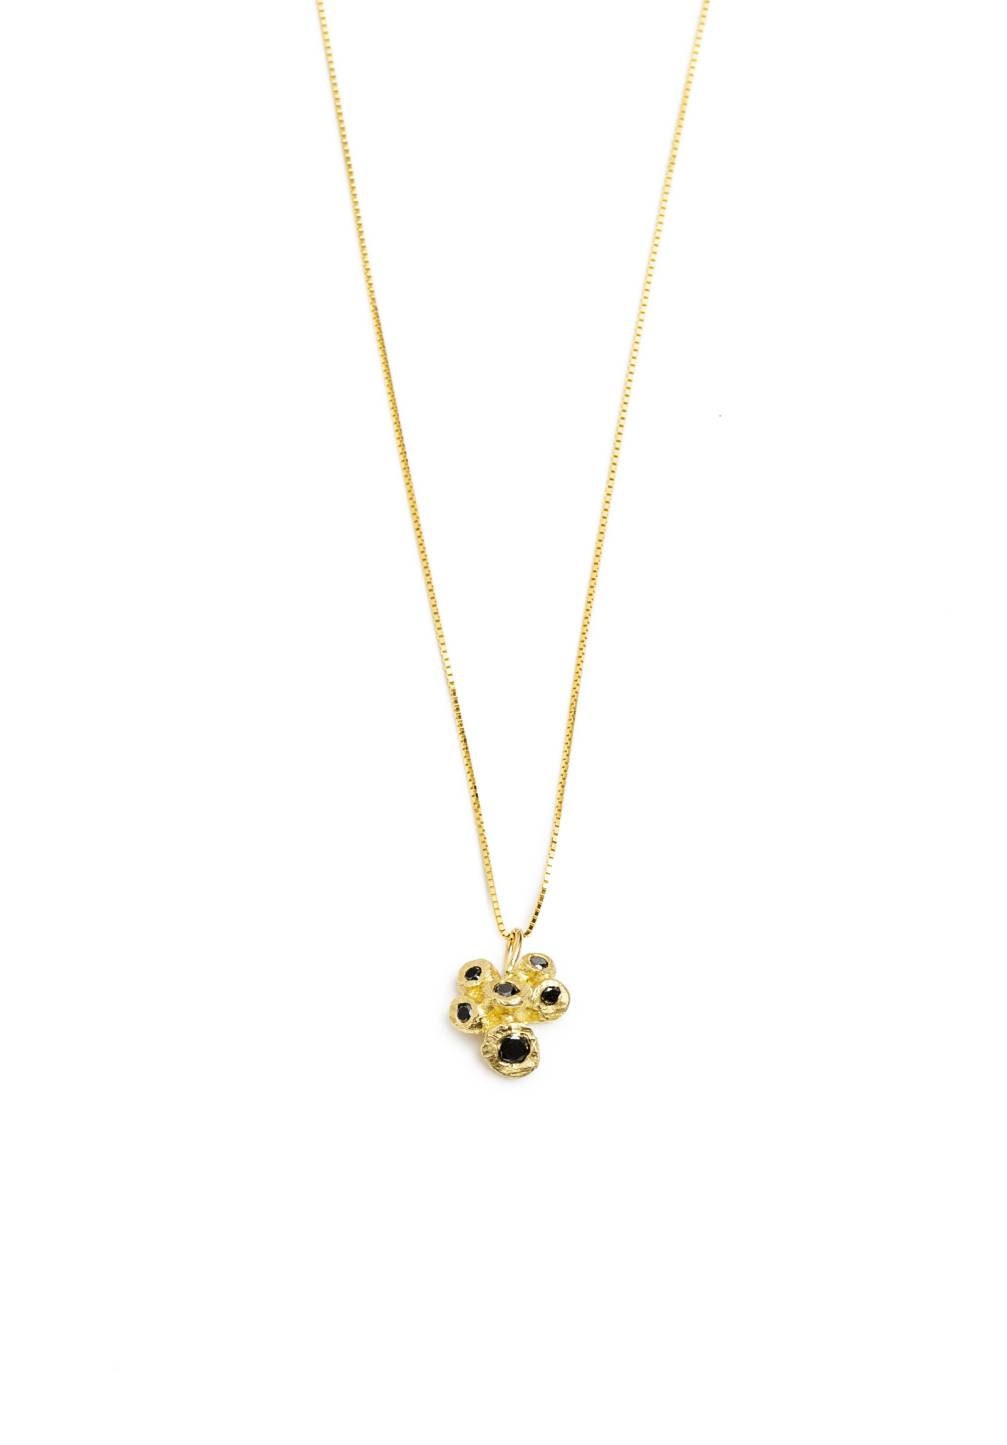 Black diamonds flower necklace. Gold diamonds cluster | Etsy